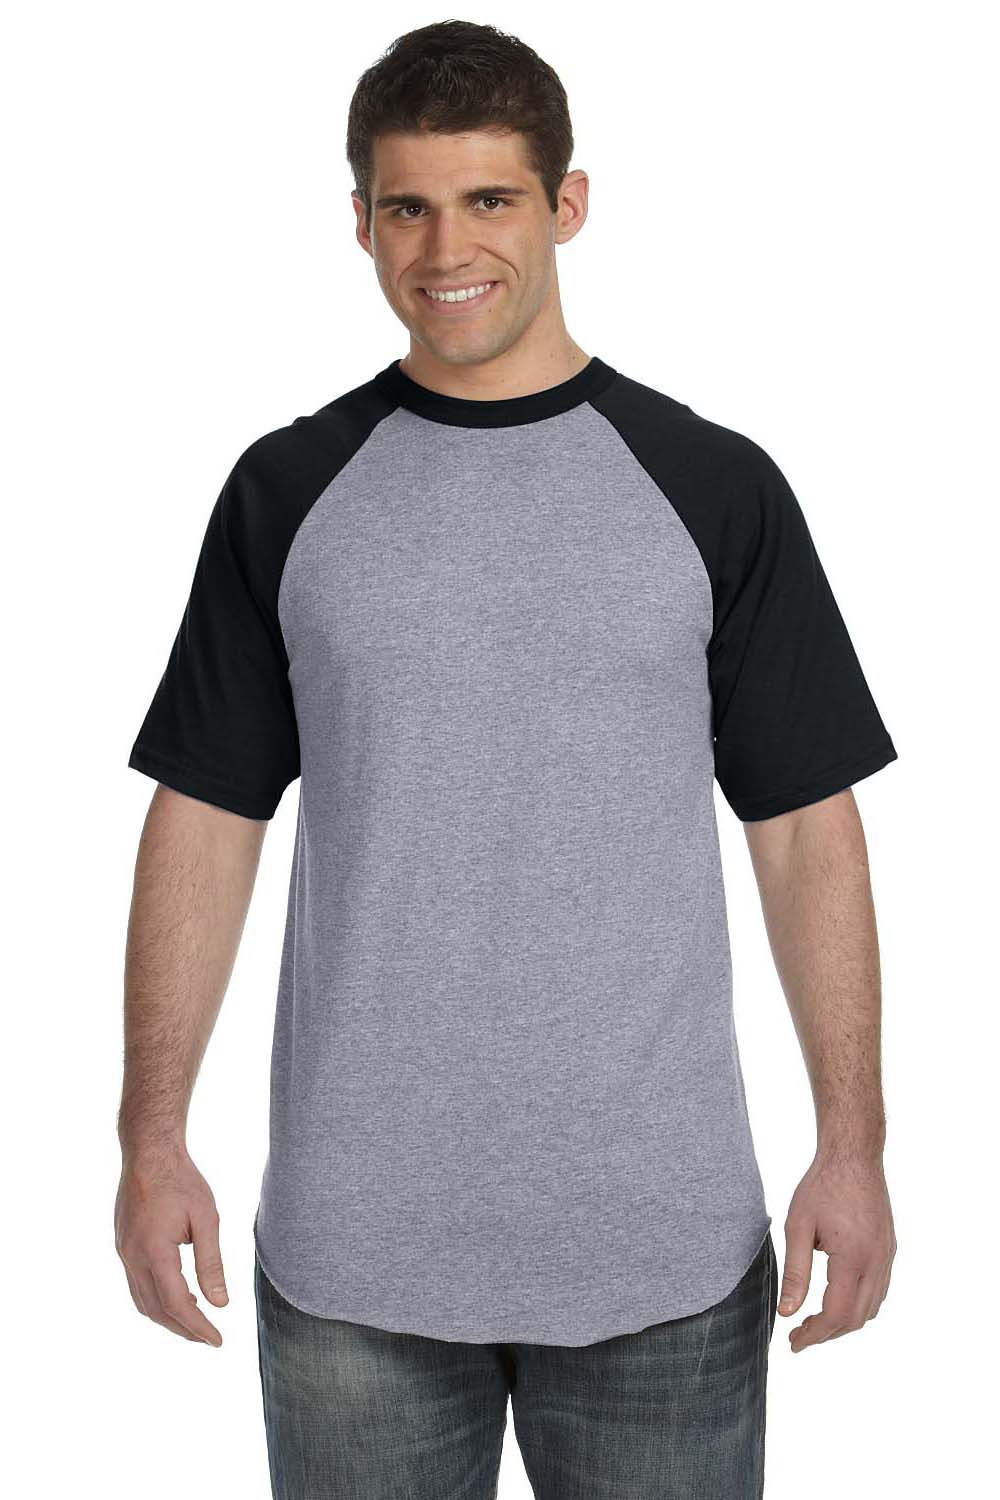 Augusta Sportswear 423 Mens Short Sleeve Crewneck T-Shirt Heather Grey/Black Model Front